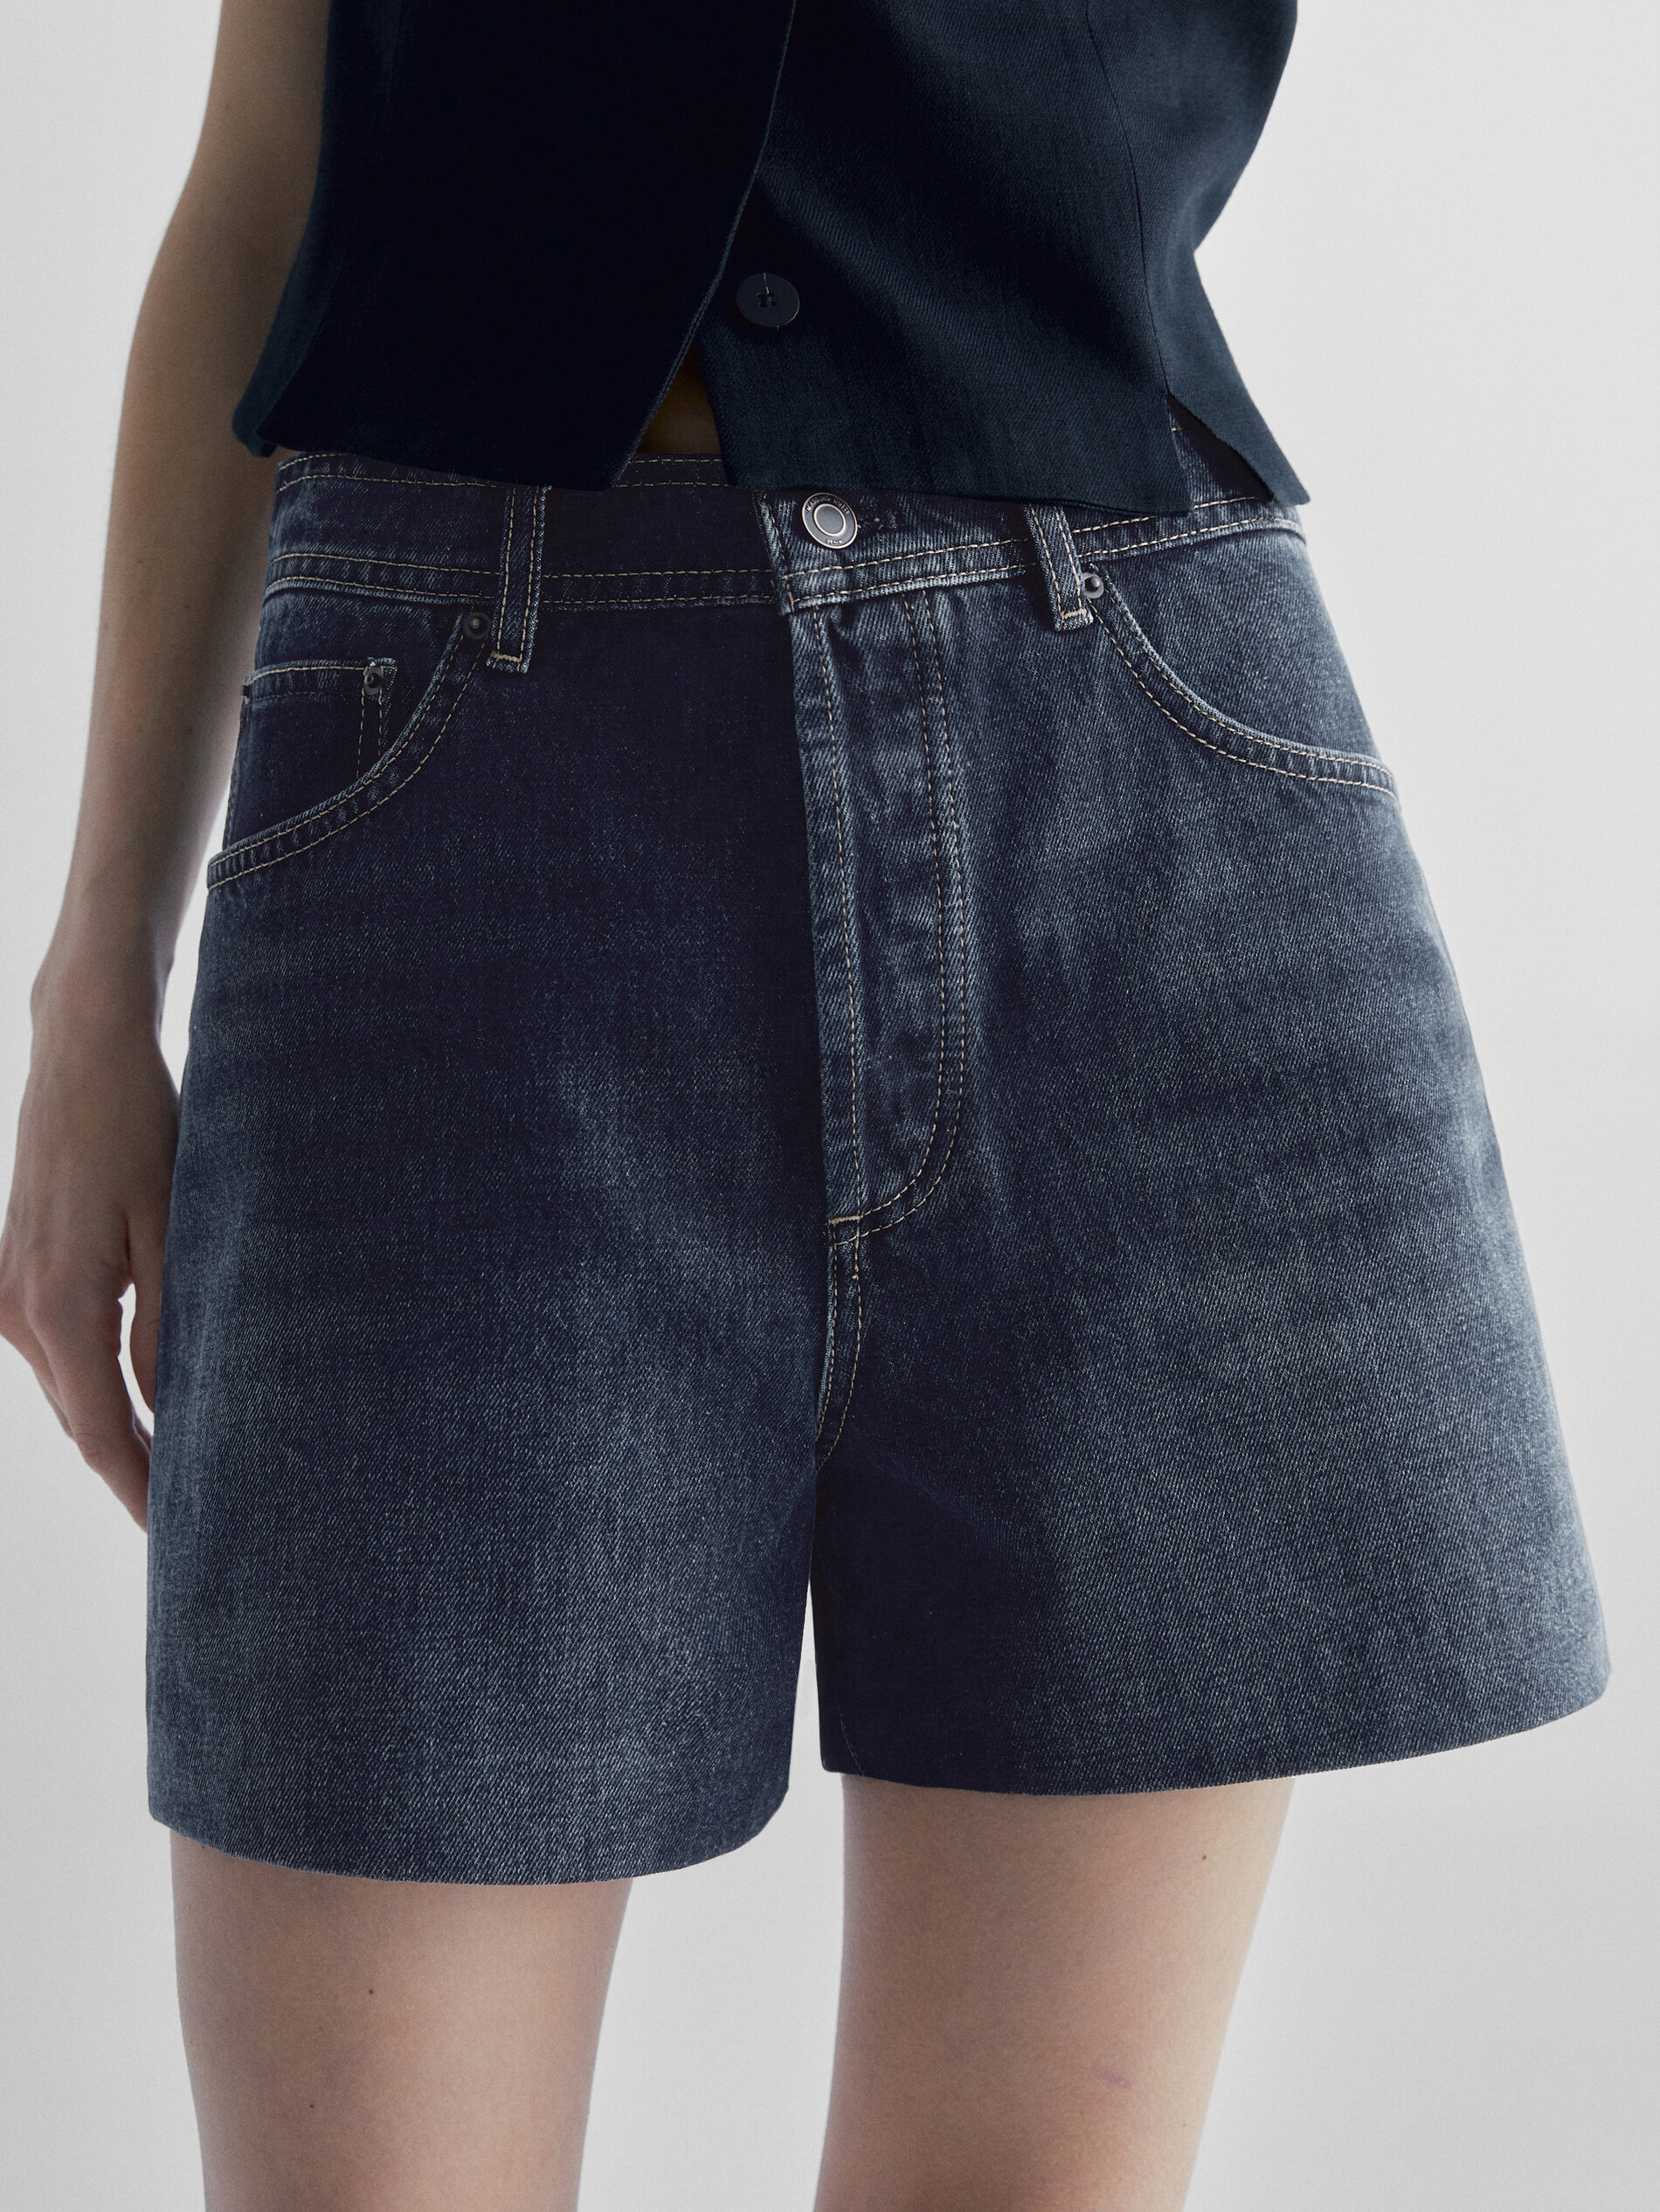 High waist denim shorts with leather pocket